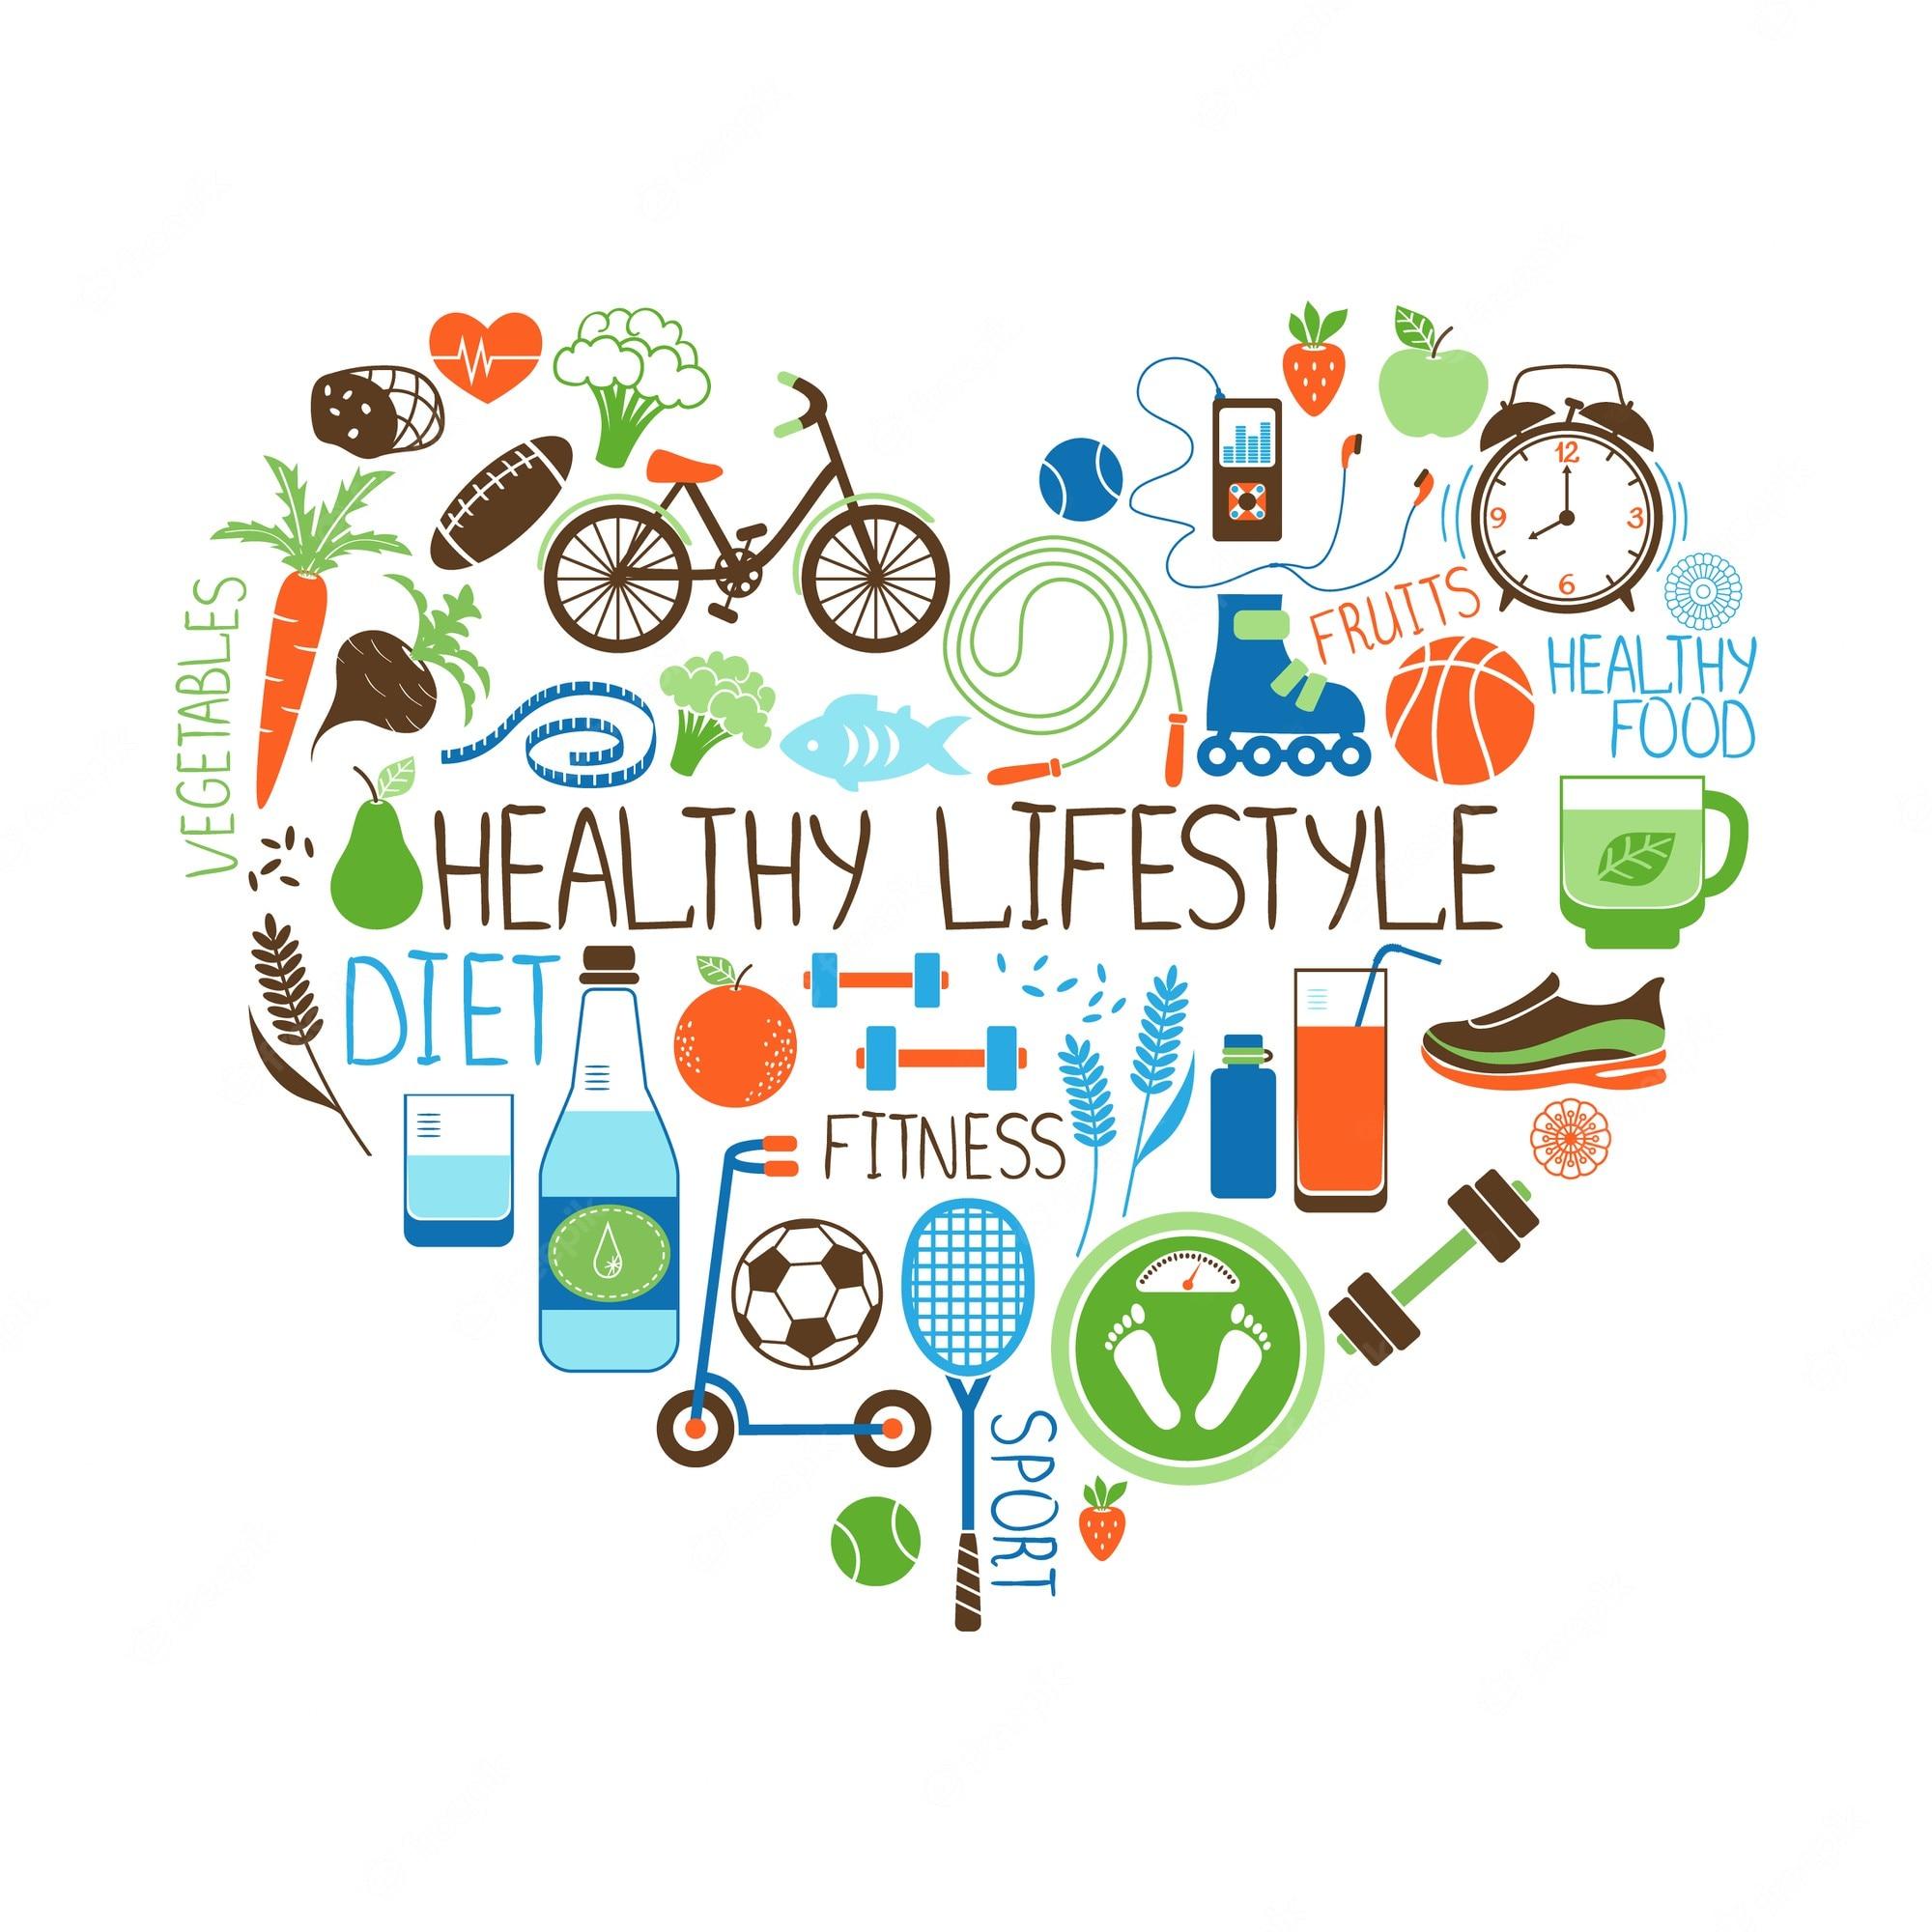 Healthy Lifestyle Images - Free Download on Freepik